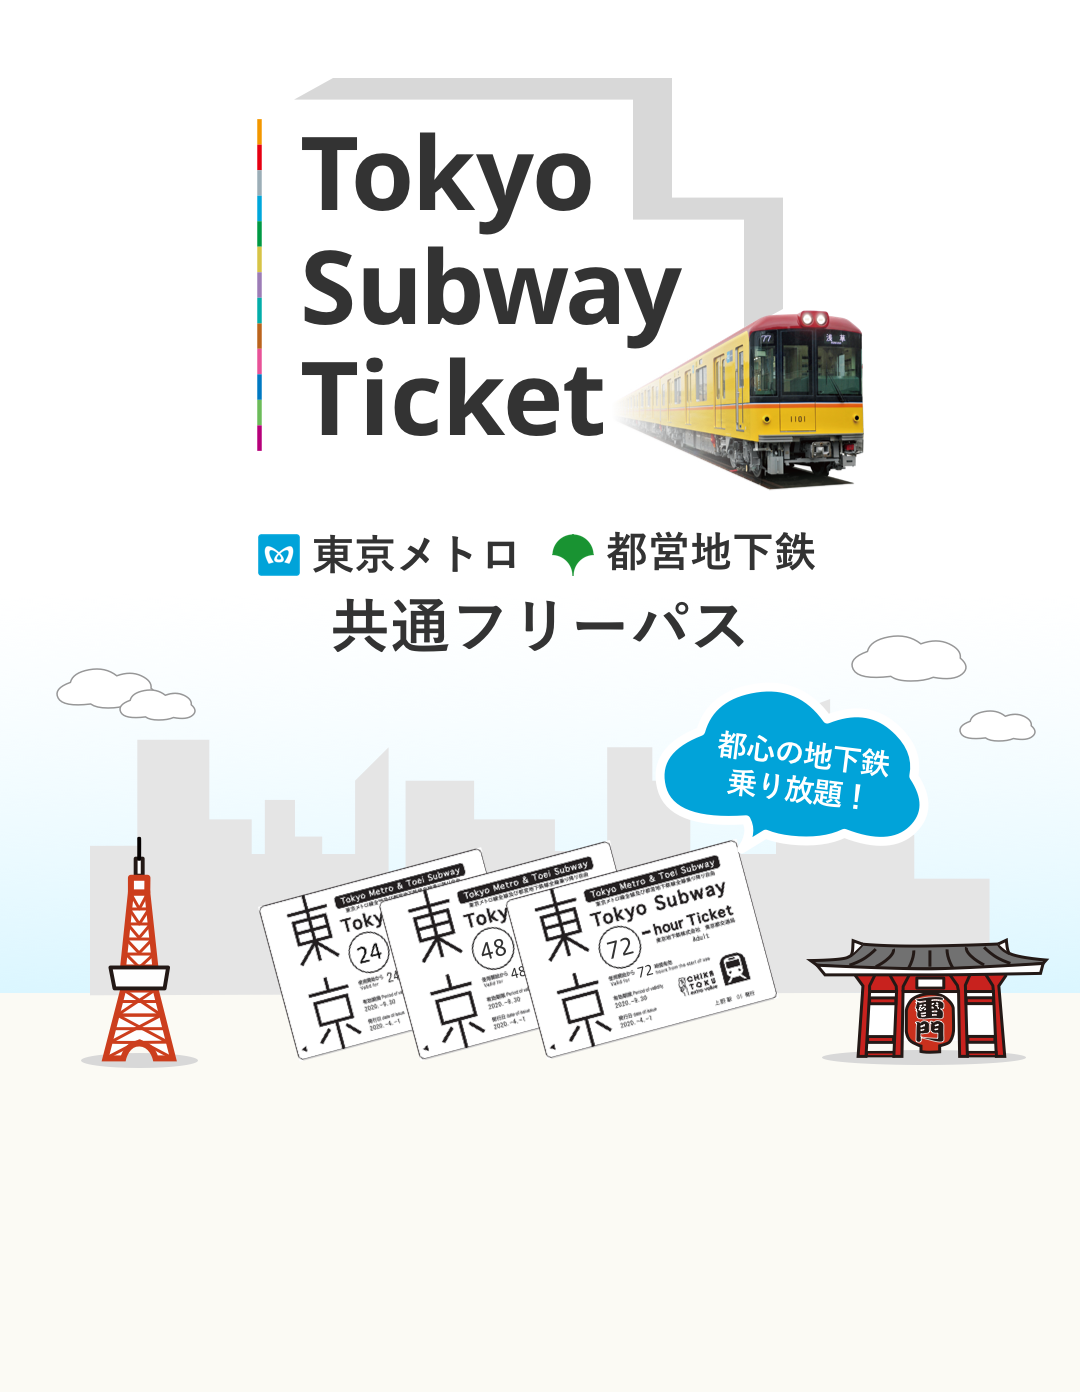 Tokyo Subway Ticket（都内地下鉄フリーパス）のご案内 - NAVITIME Travel